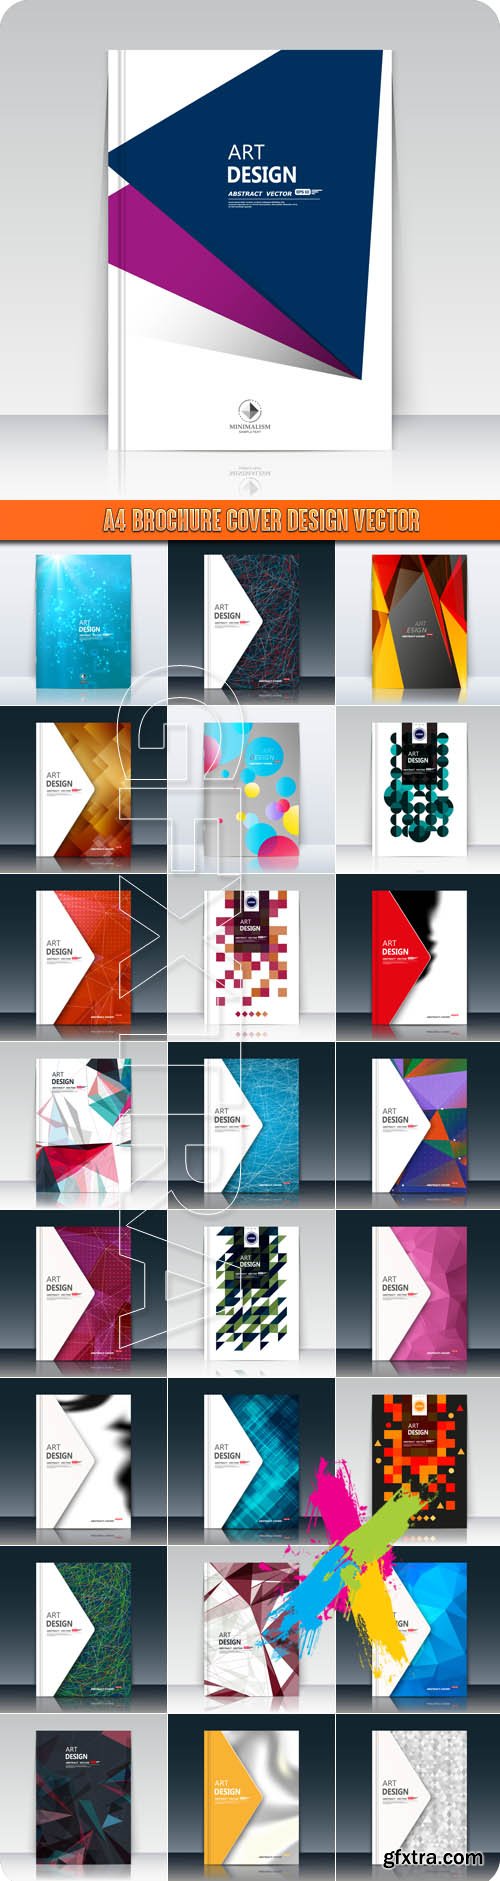 A4 brochure cover design vector